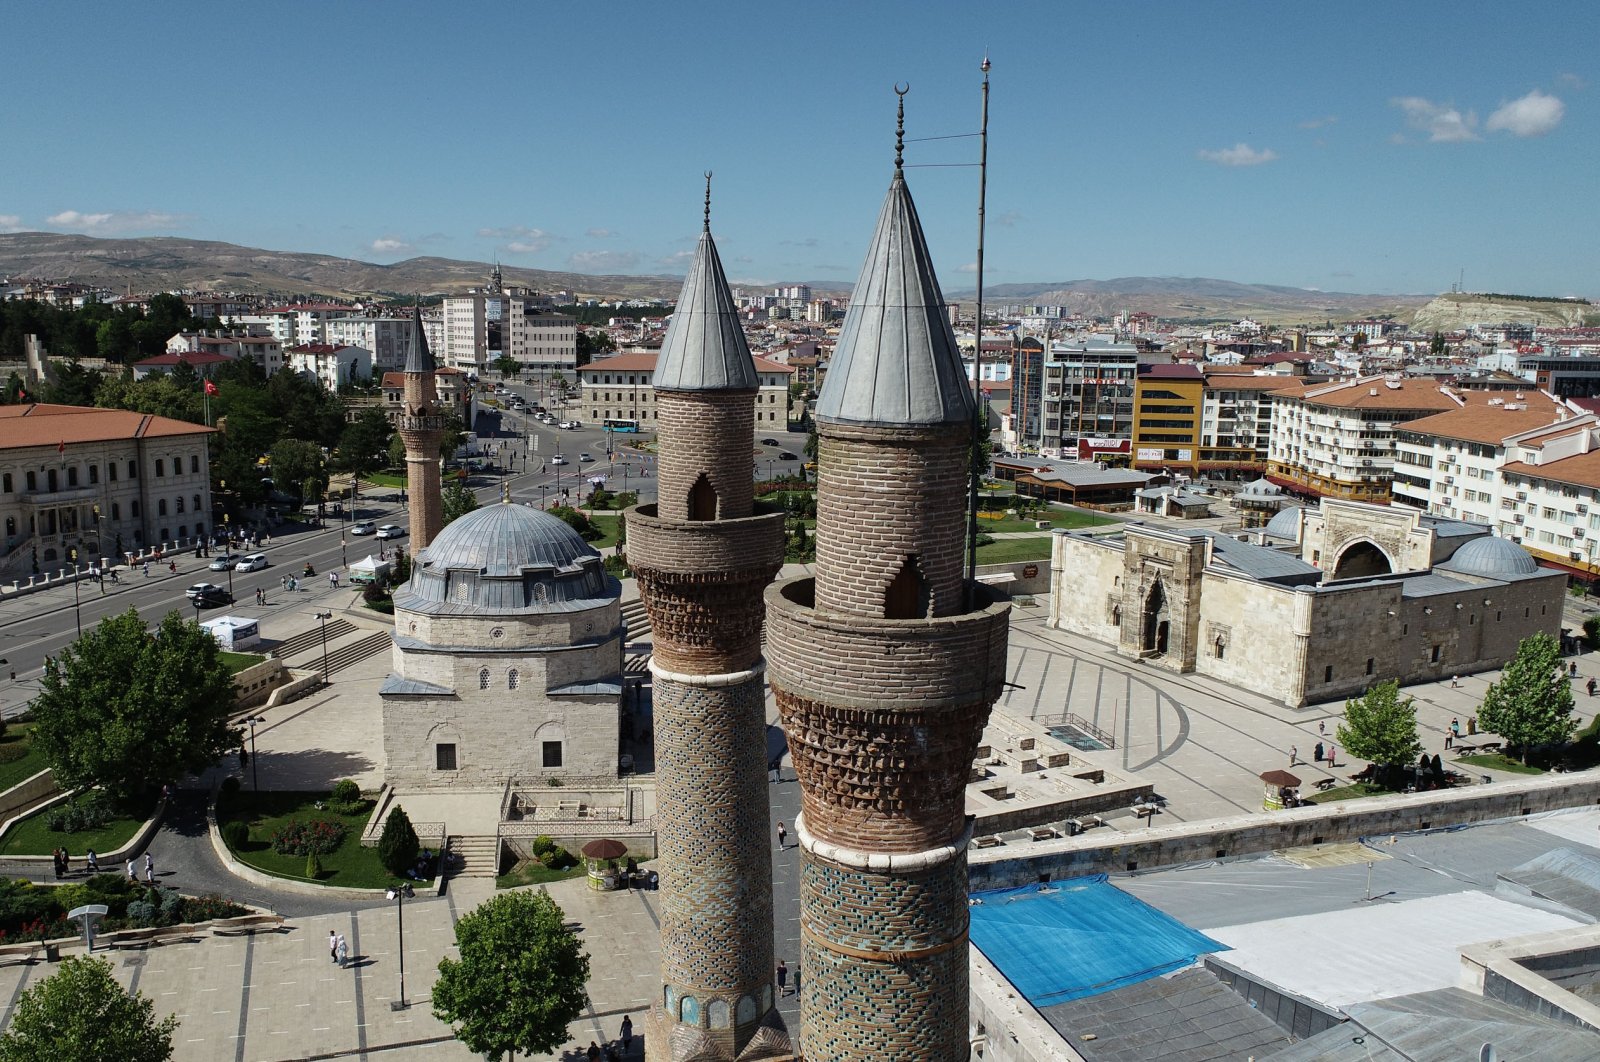 Türkiye’s central Sivas eyes UNESCO tentative heritage list